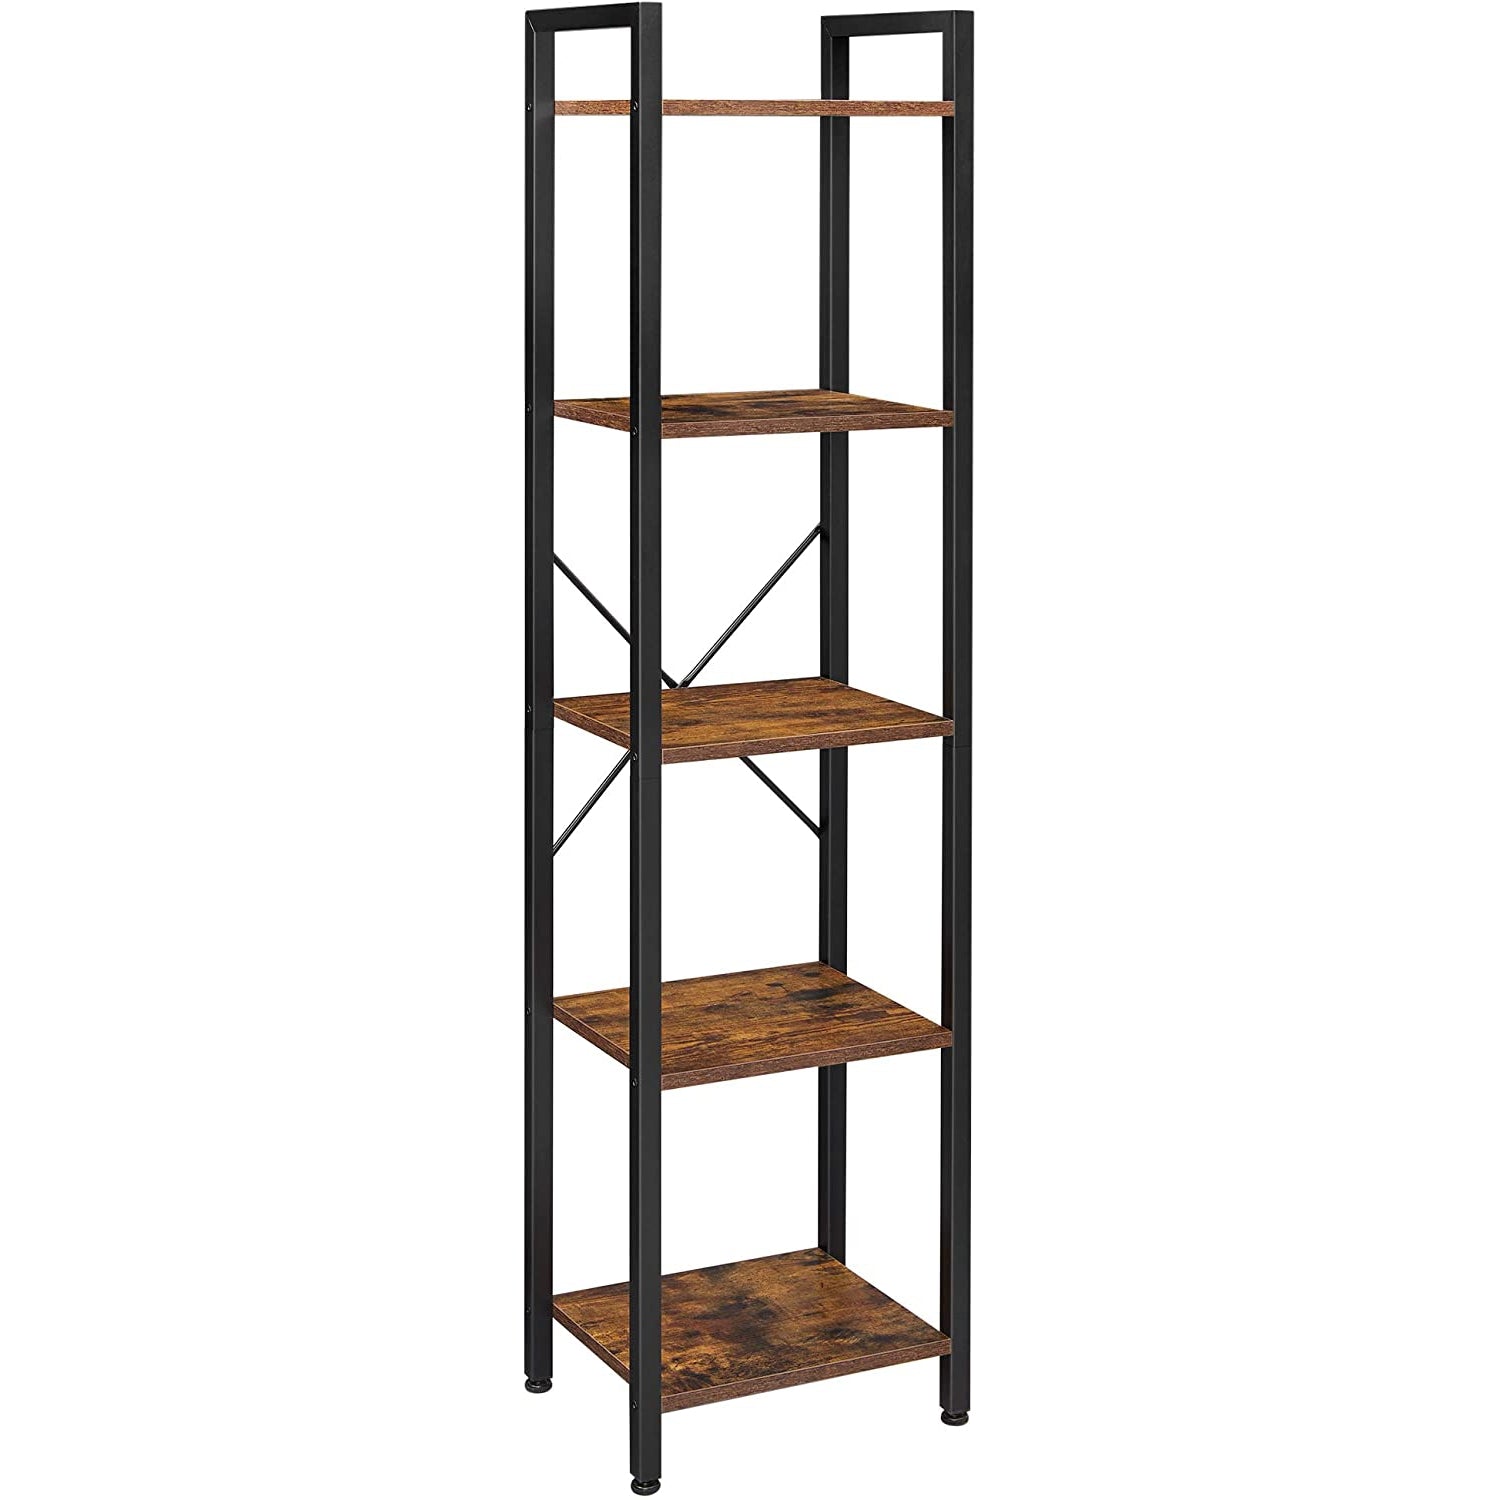 Nancy's Burke Storage Rack - Bookcase - Open Cabinet - 5 Levels - Vintage - Industrial - Brown - Processed Wood - Metal - 40 x 30 x 146 cm